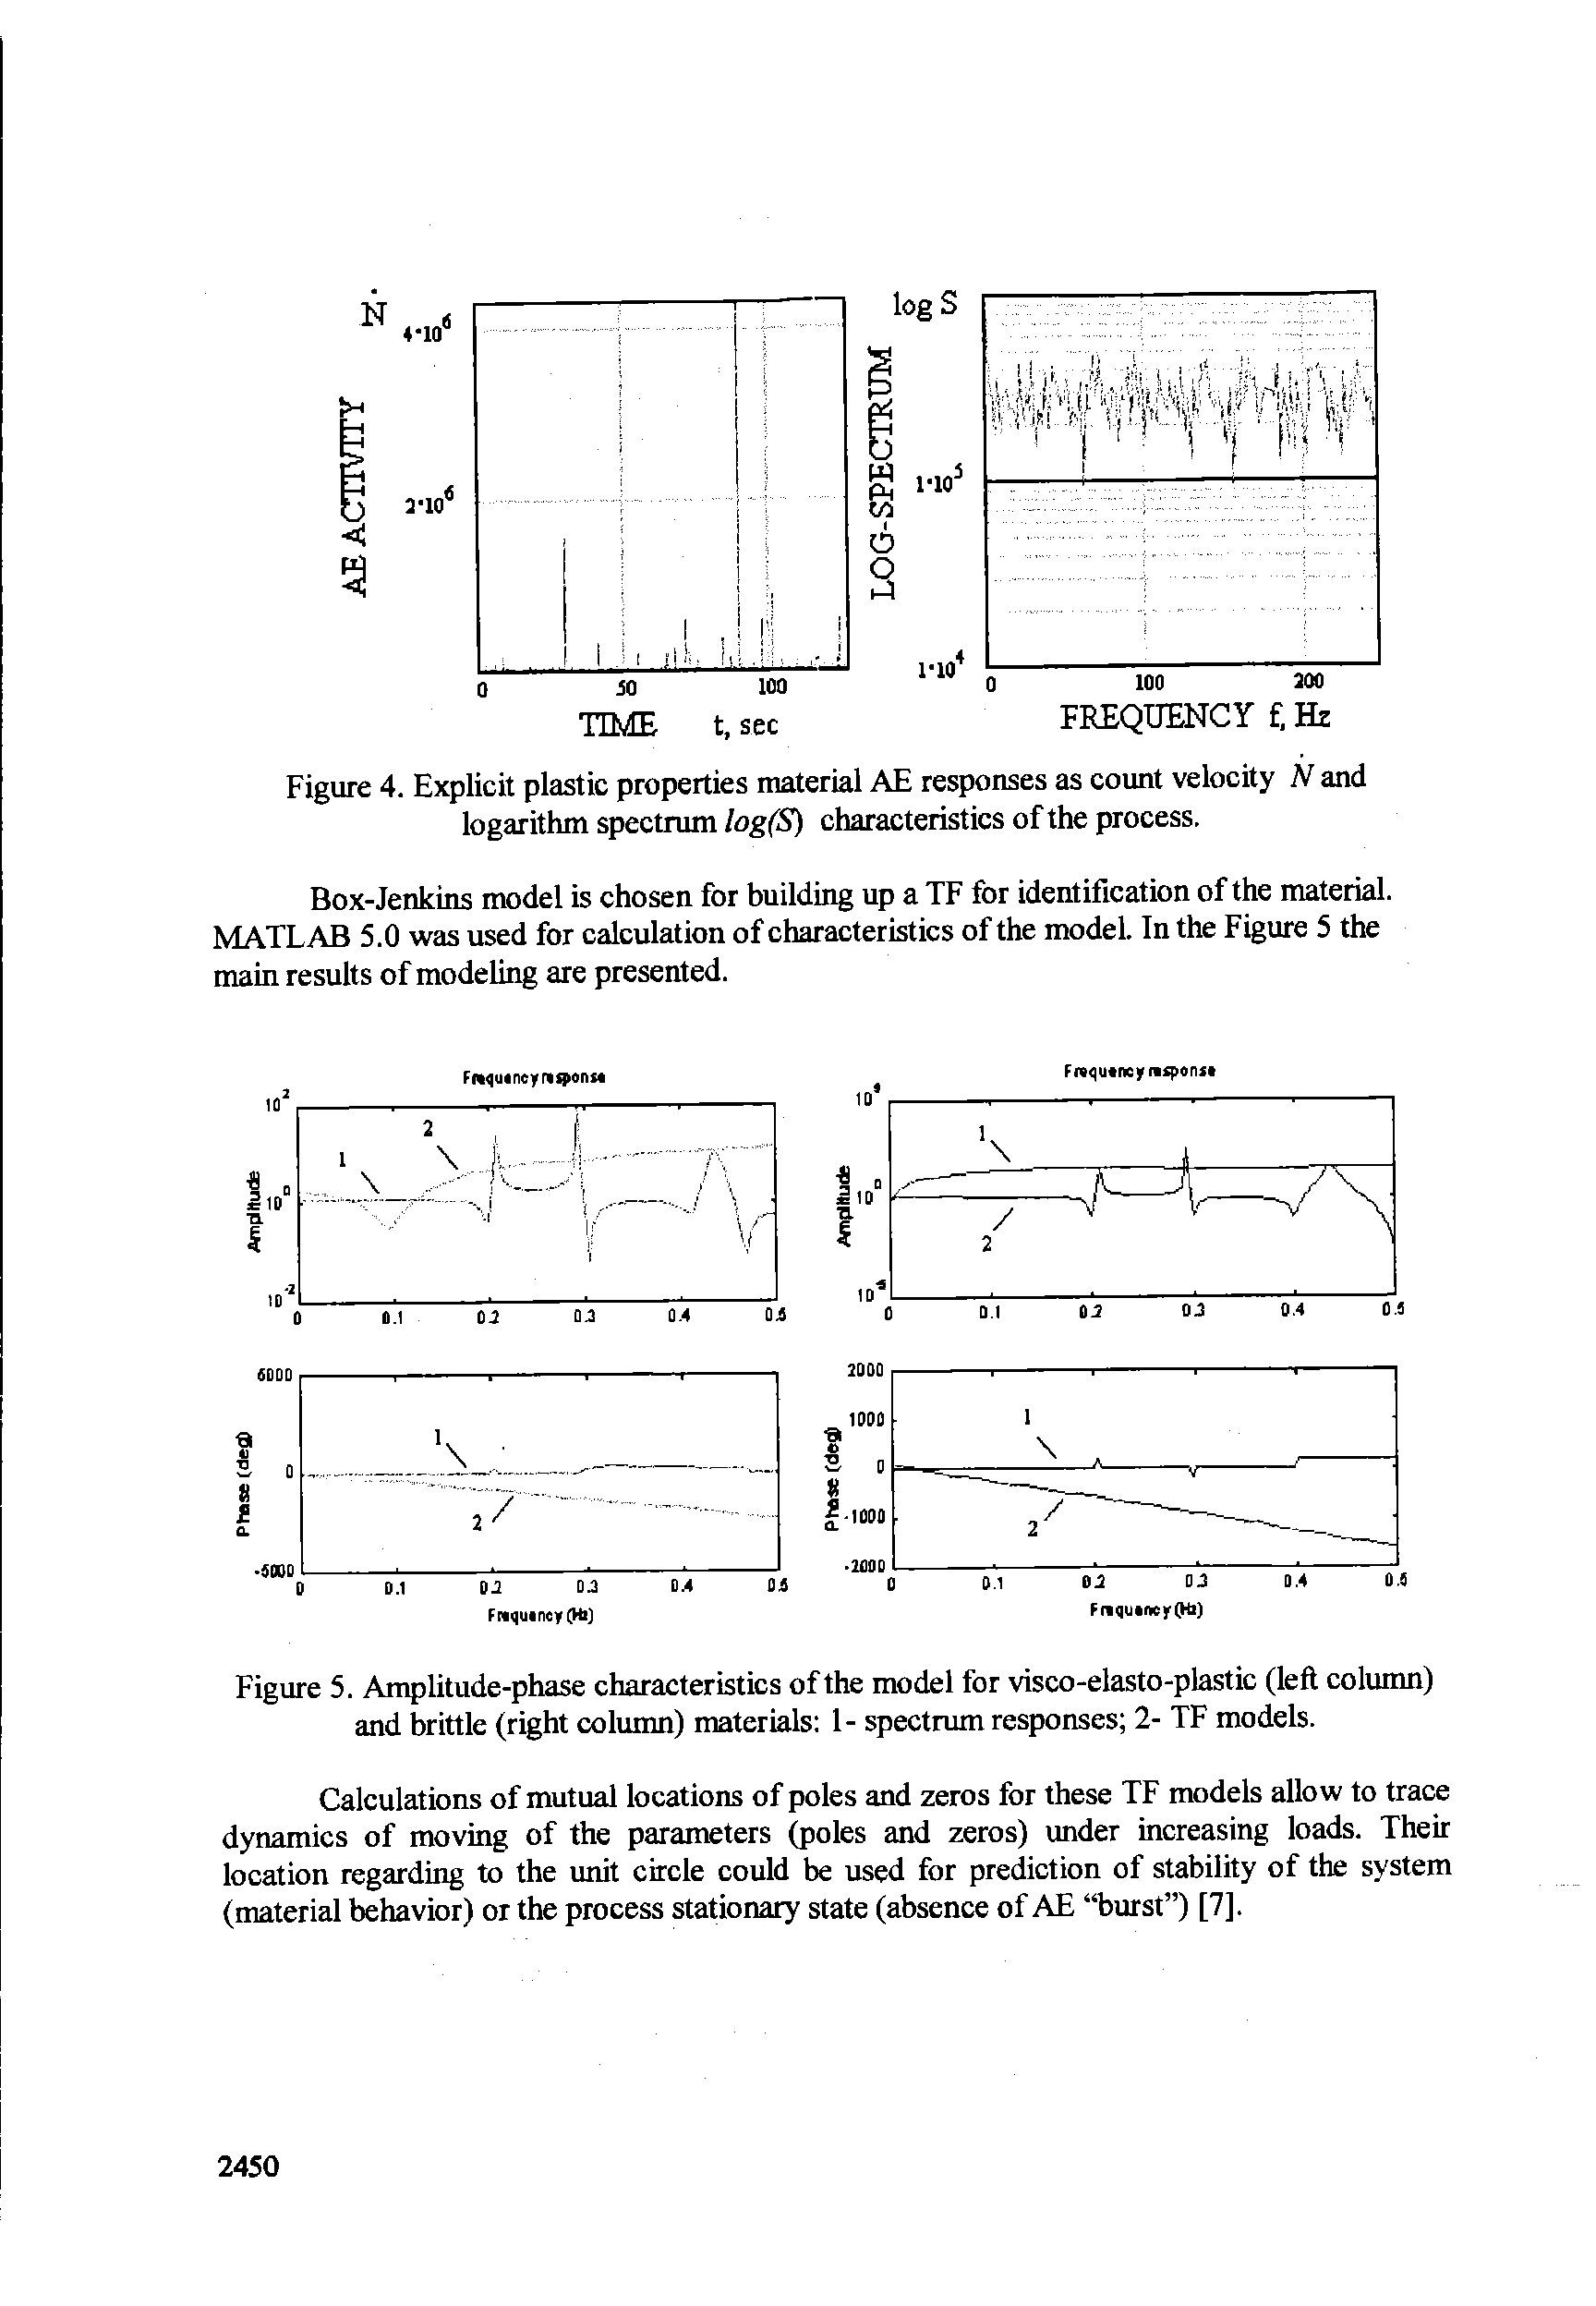 Figure 5. Amplitude-phase characteristics of the model for visco-elasto-plastic (left column) and brittle (right column) materials 1- spectrum responses 2- TF models.